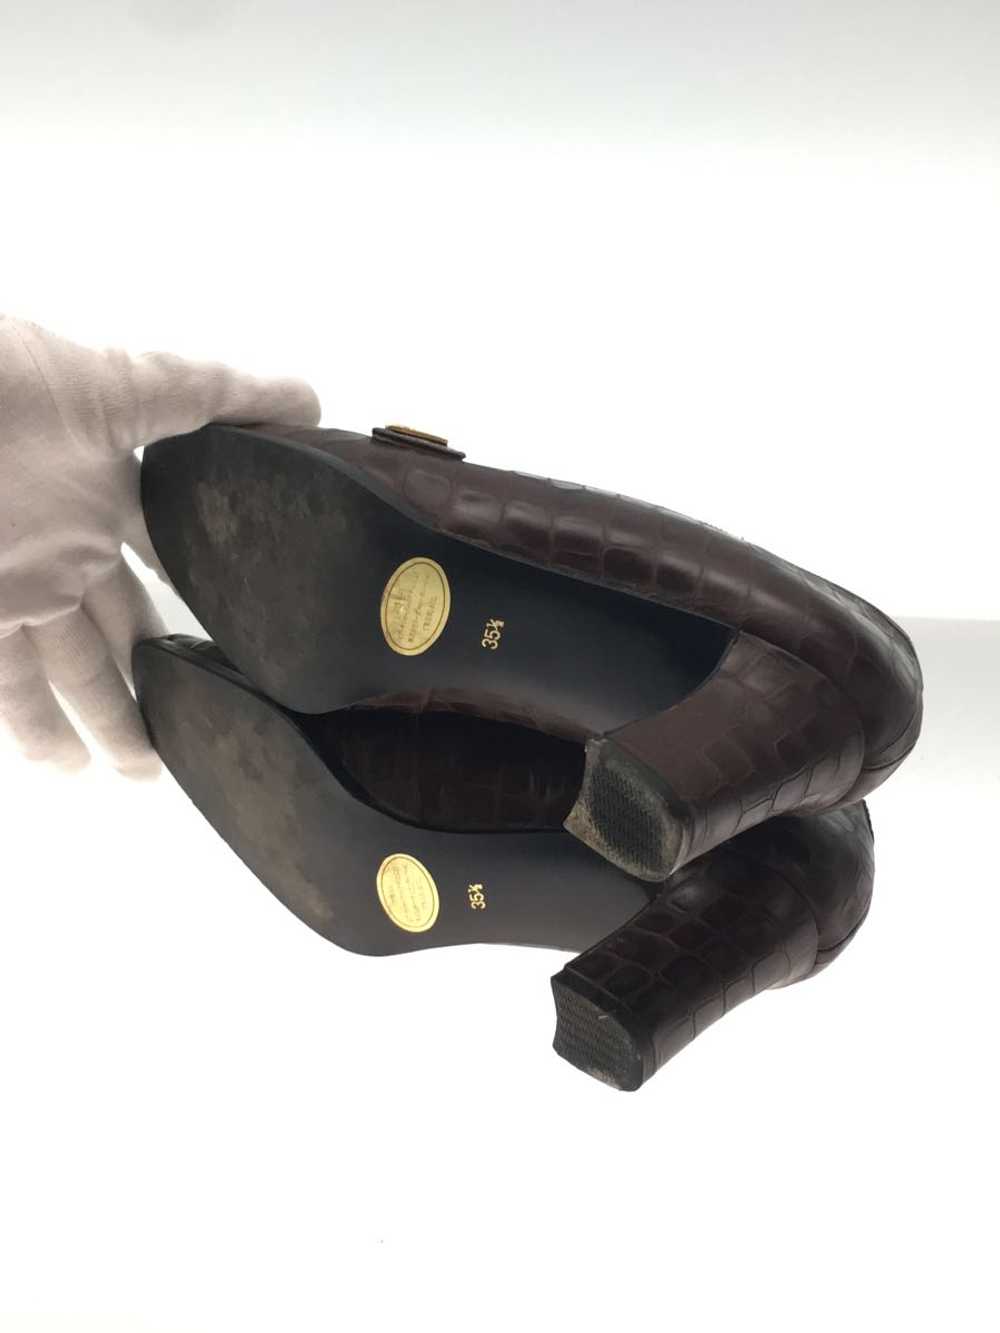 Yves Saint Laurent Pumps/35.5/Brw/6715/Used Shoes… - image 3